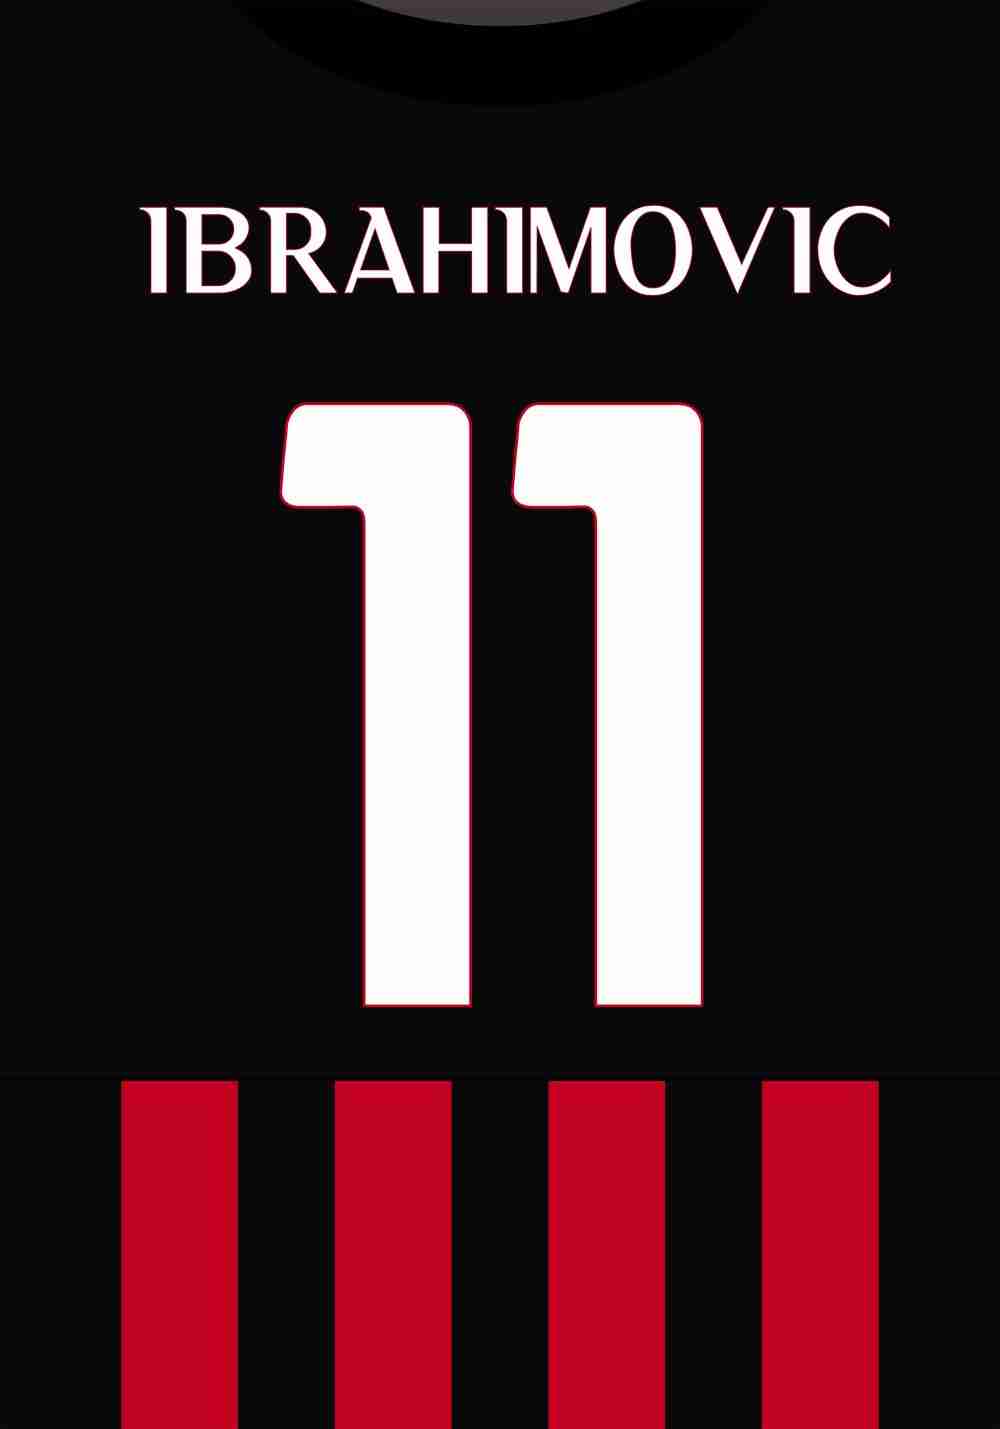 Zlatan Ibrahimovic Fotbollströja Poster